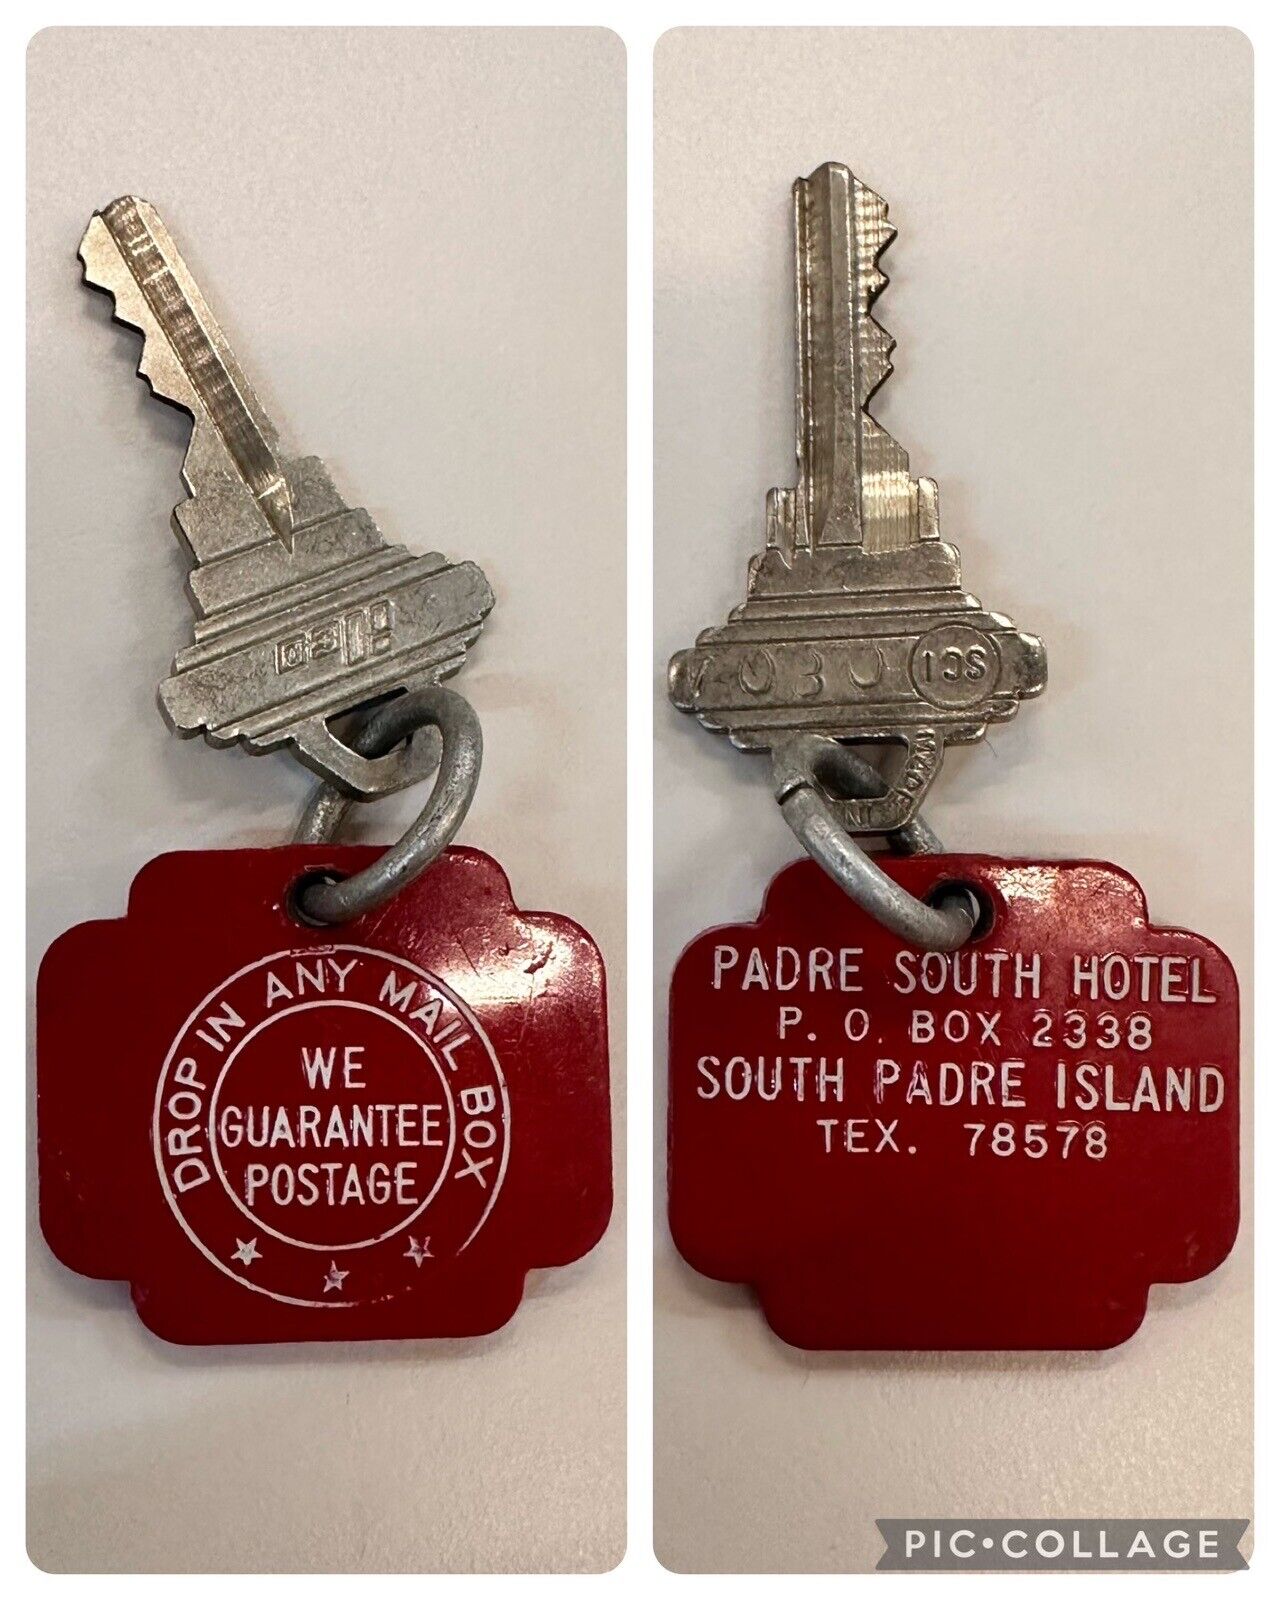 Padre South Hotel South Padre Island Texas 78578 Hotel Room Key #804